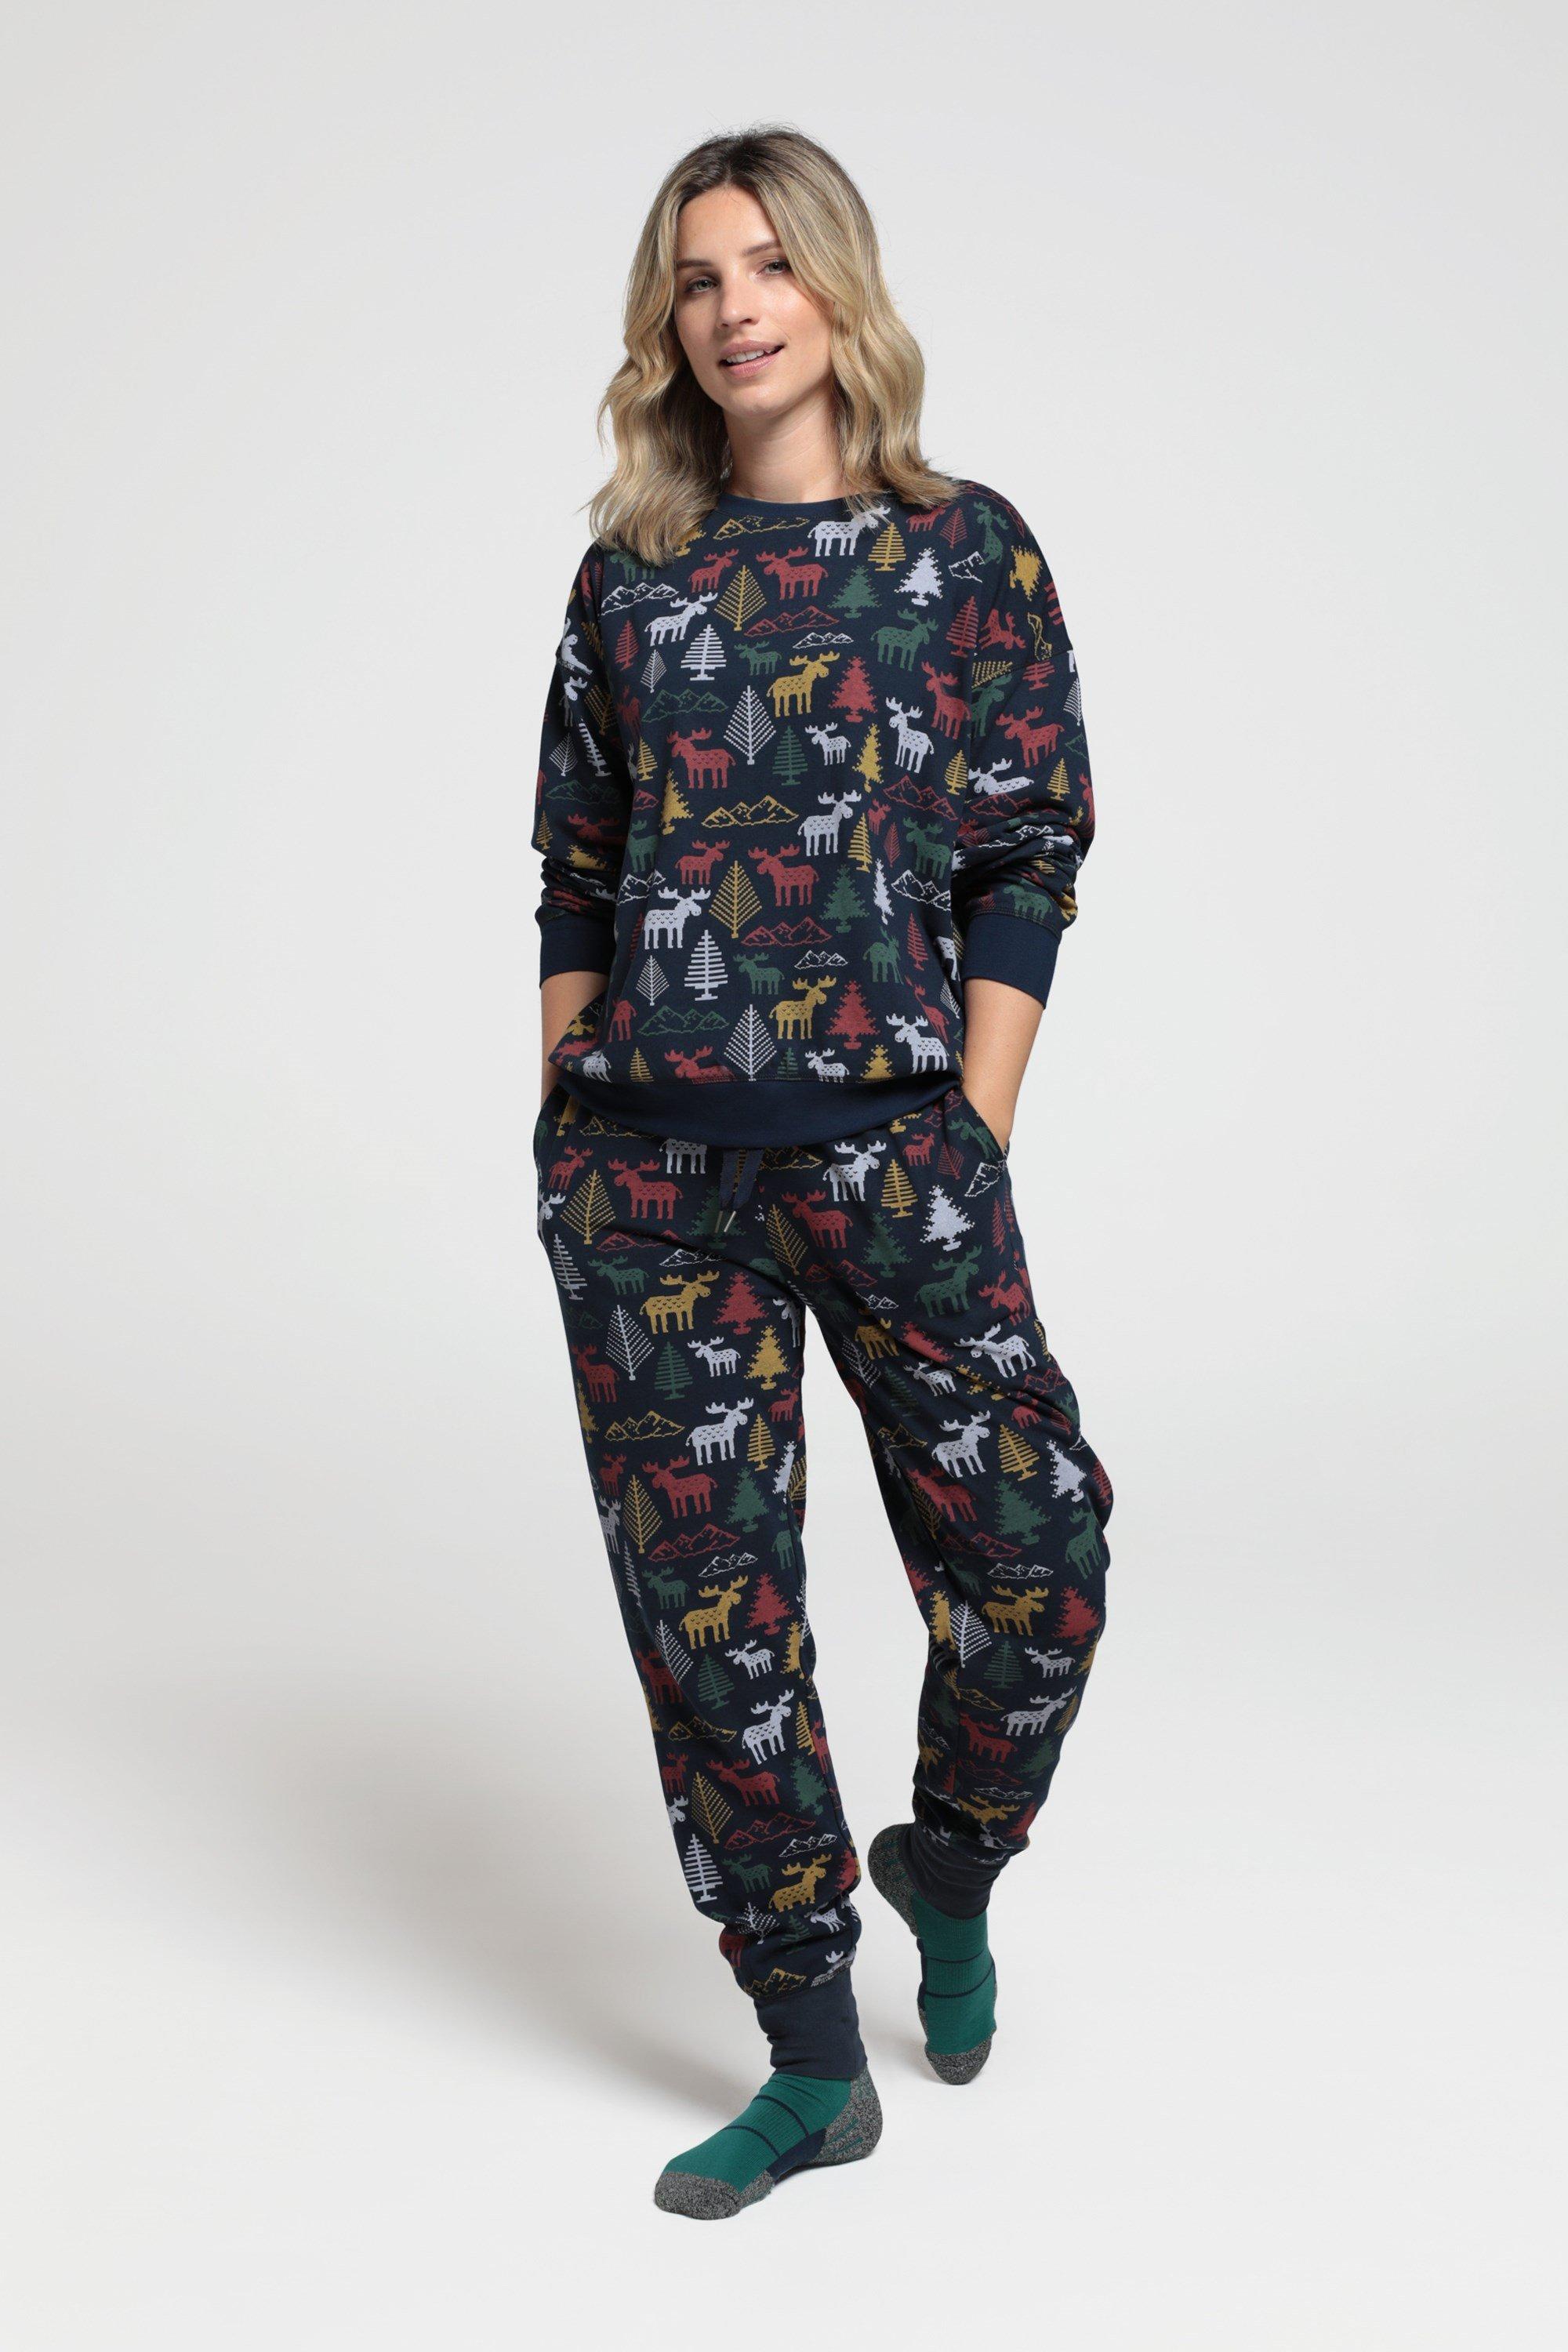 Novelty  Pyjama Set  Printed Pants Casual Top